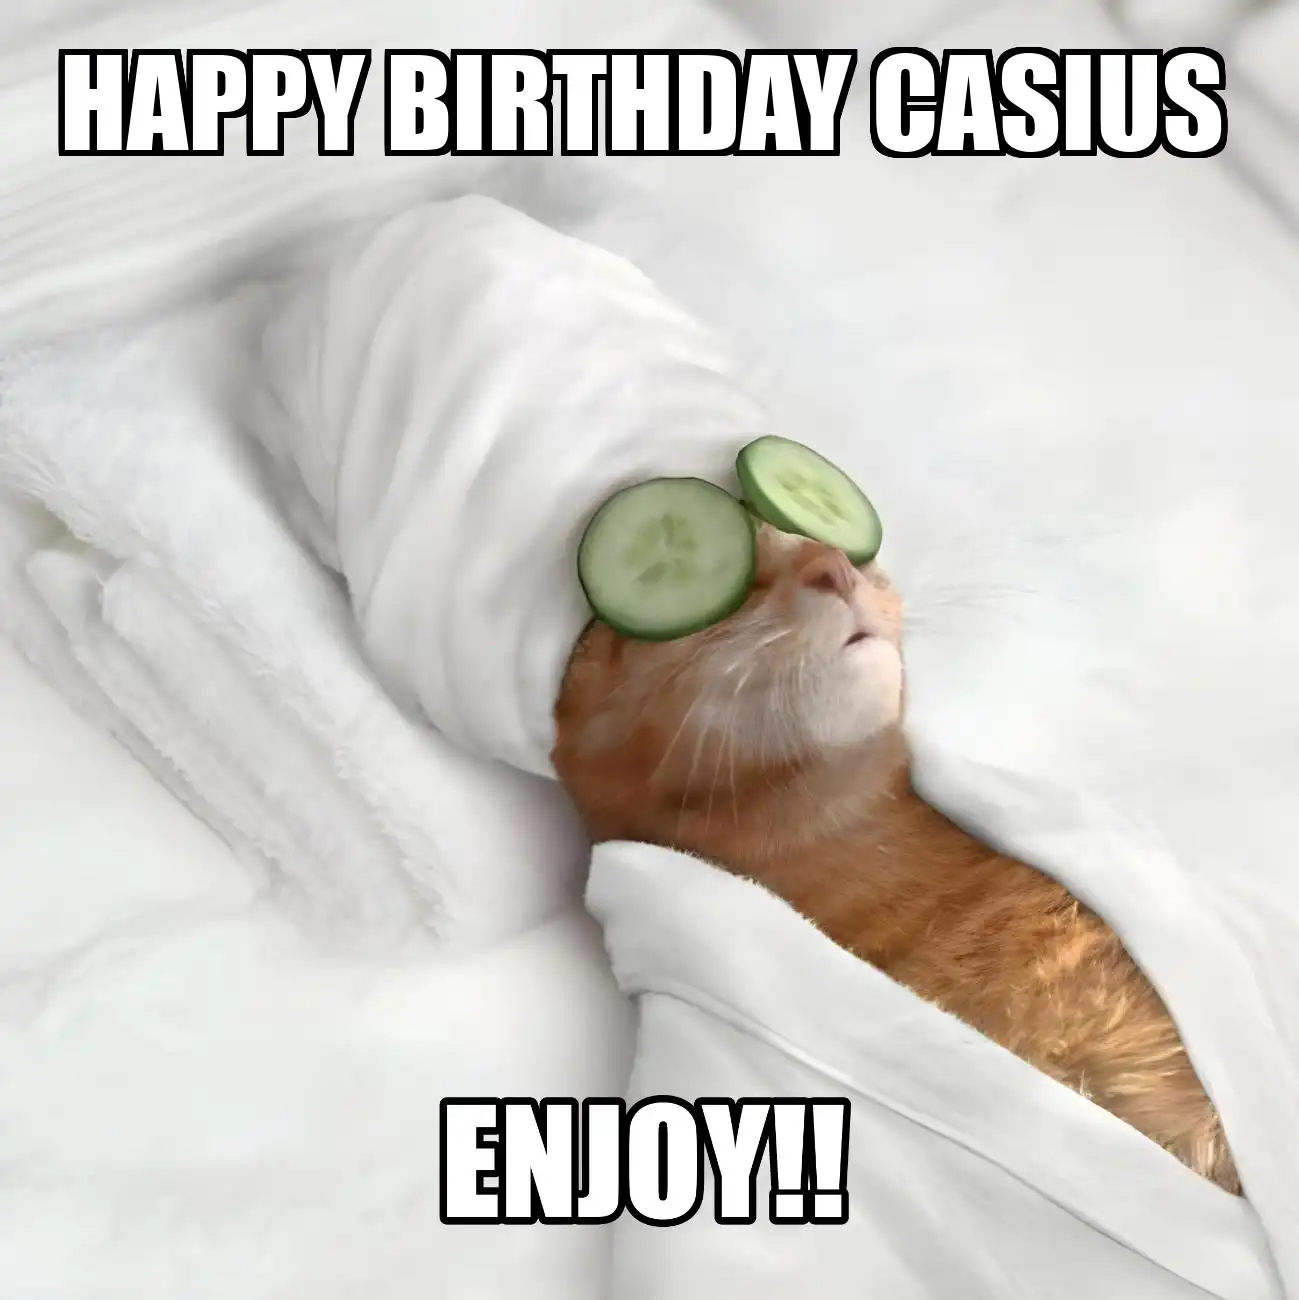 Happy Birthday Casius Enjoy Cat Meme